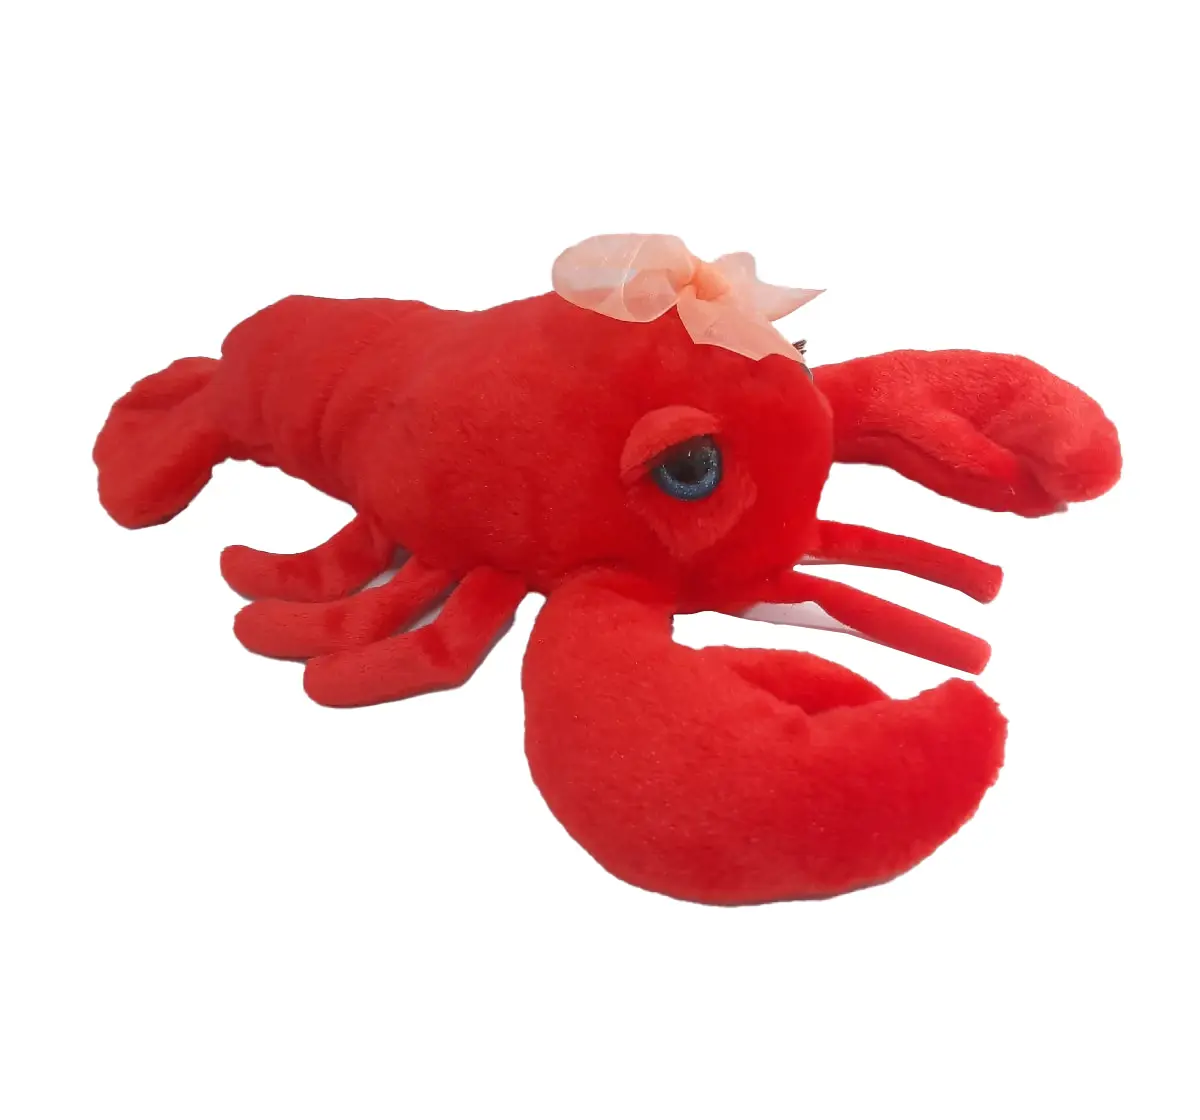 Lash Z Lobster Soft Toy 12" 30Cm